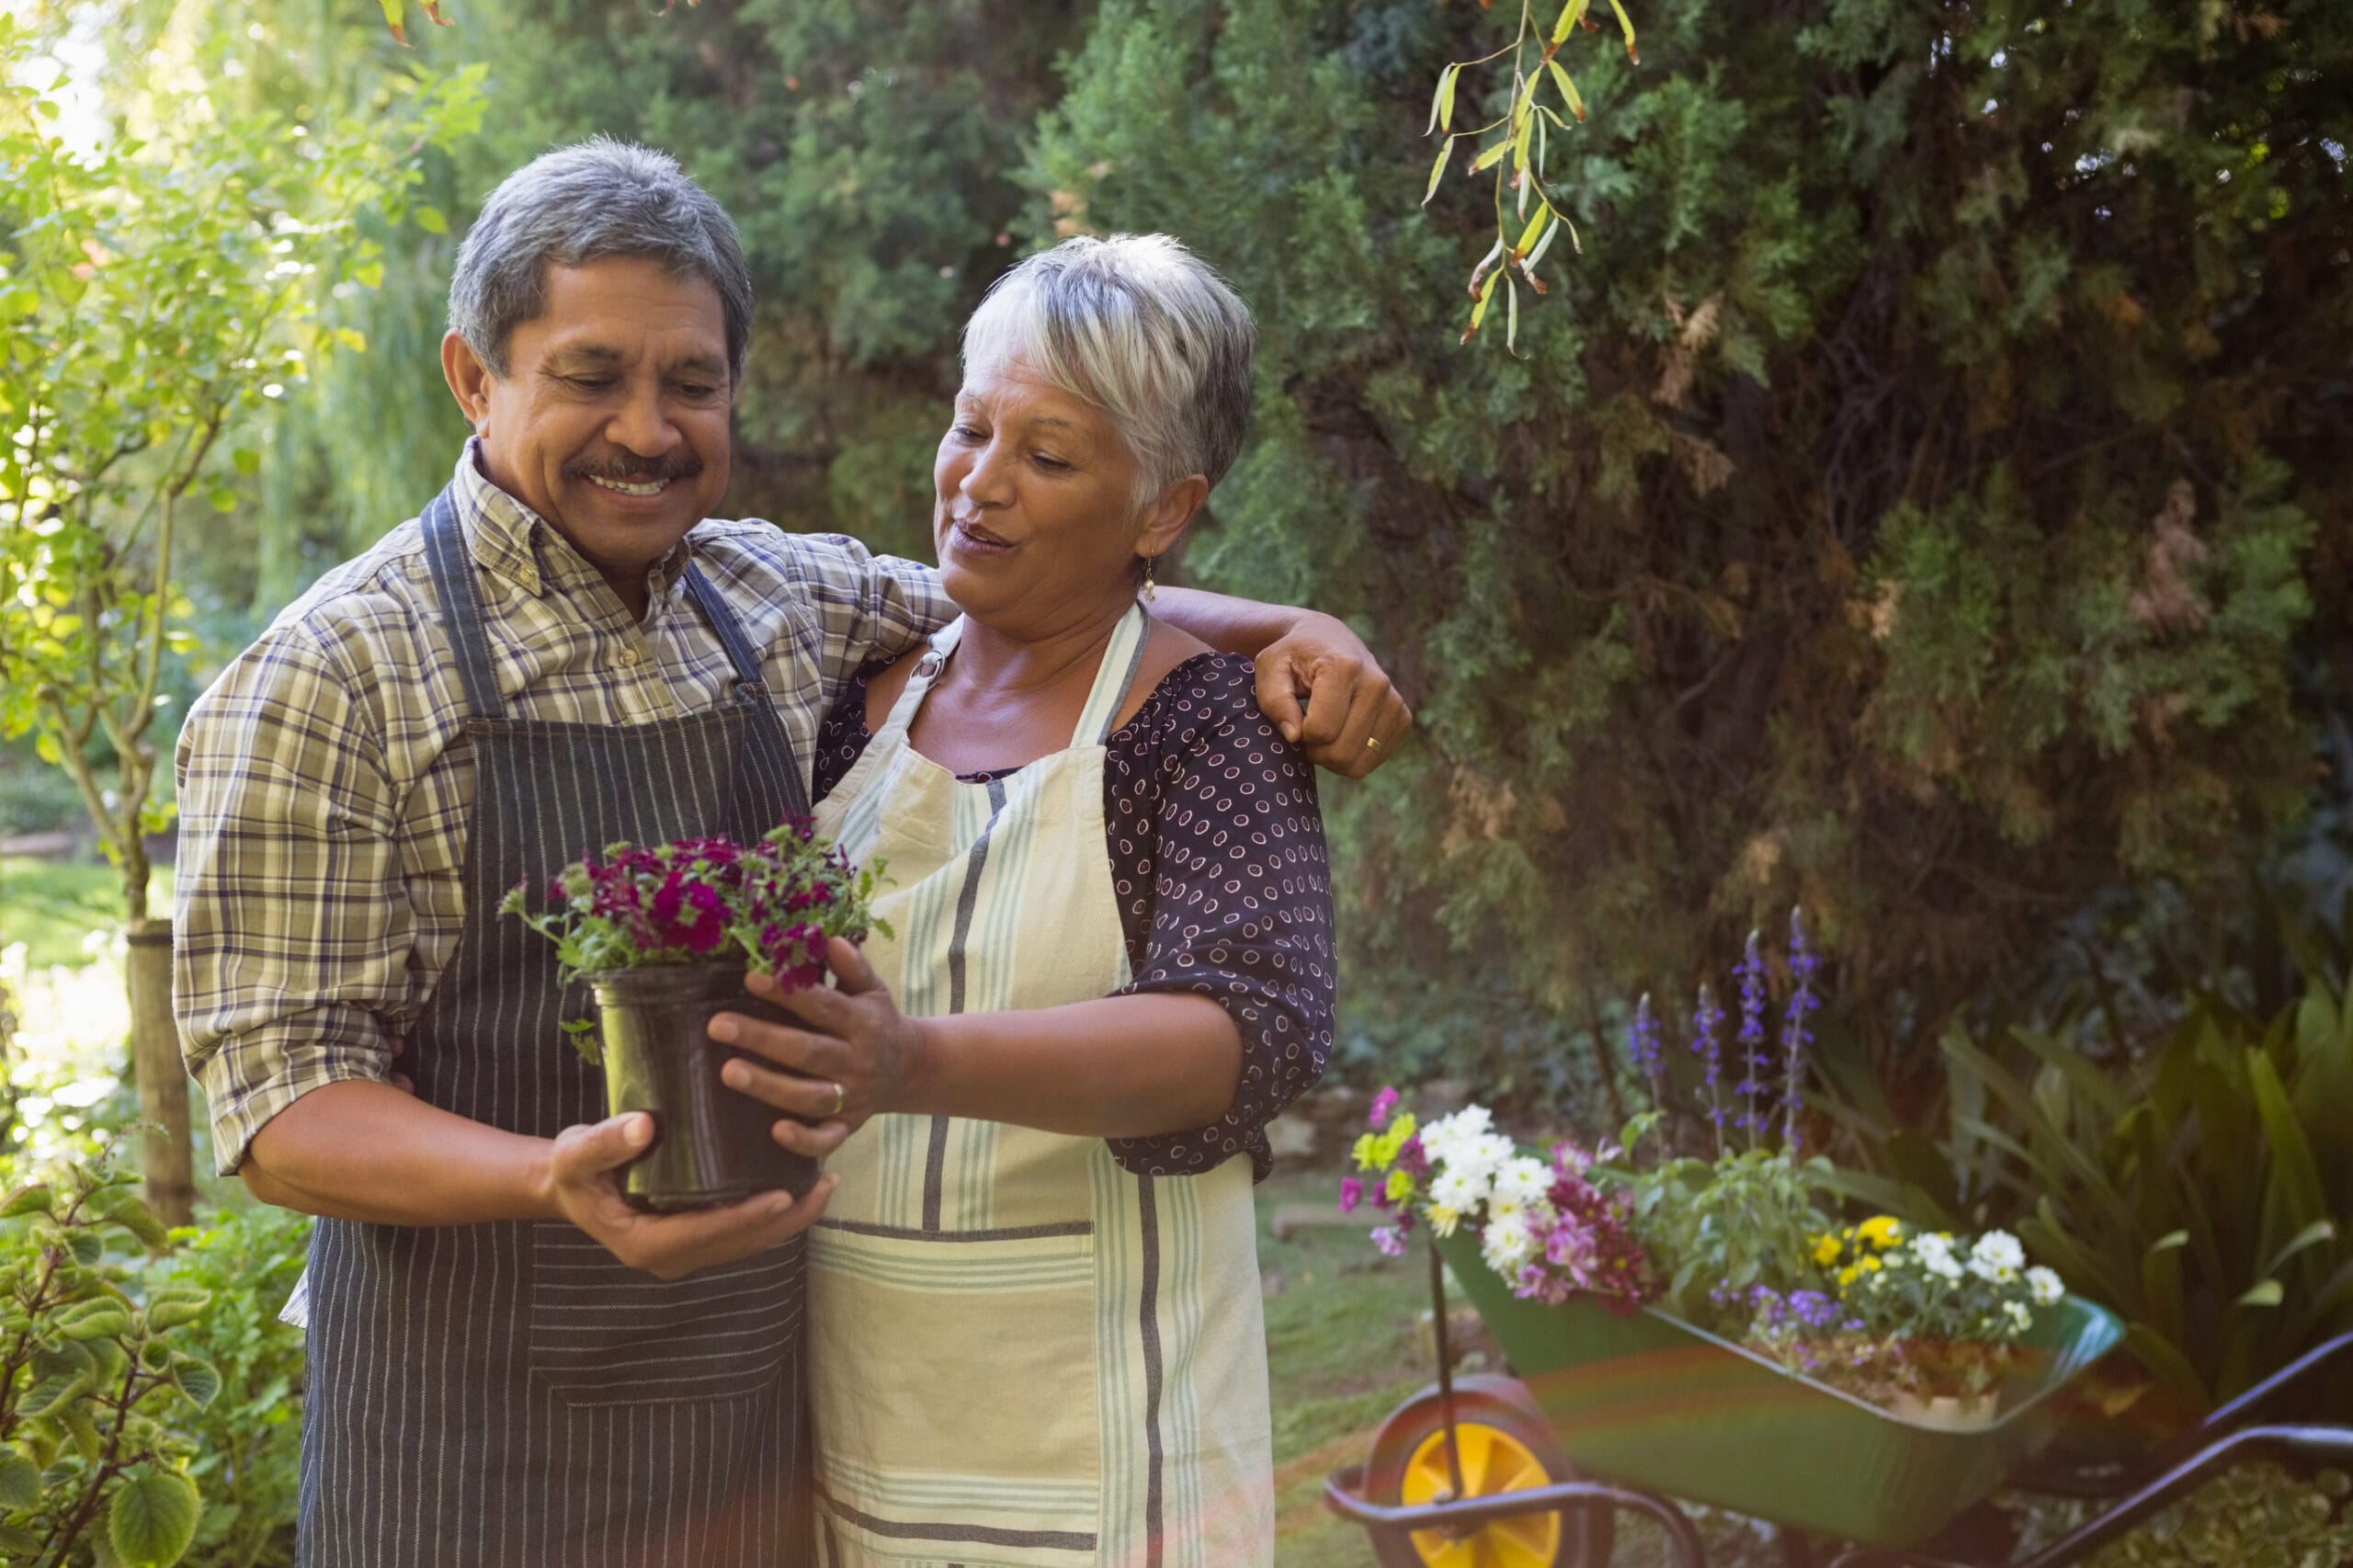 Elderly couple holding flowers in a garden